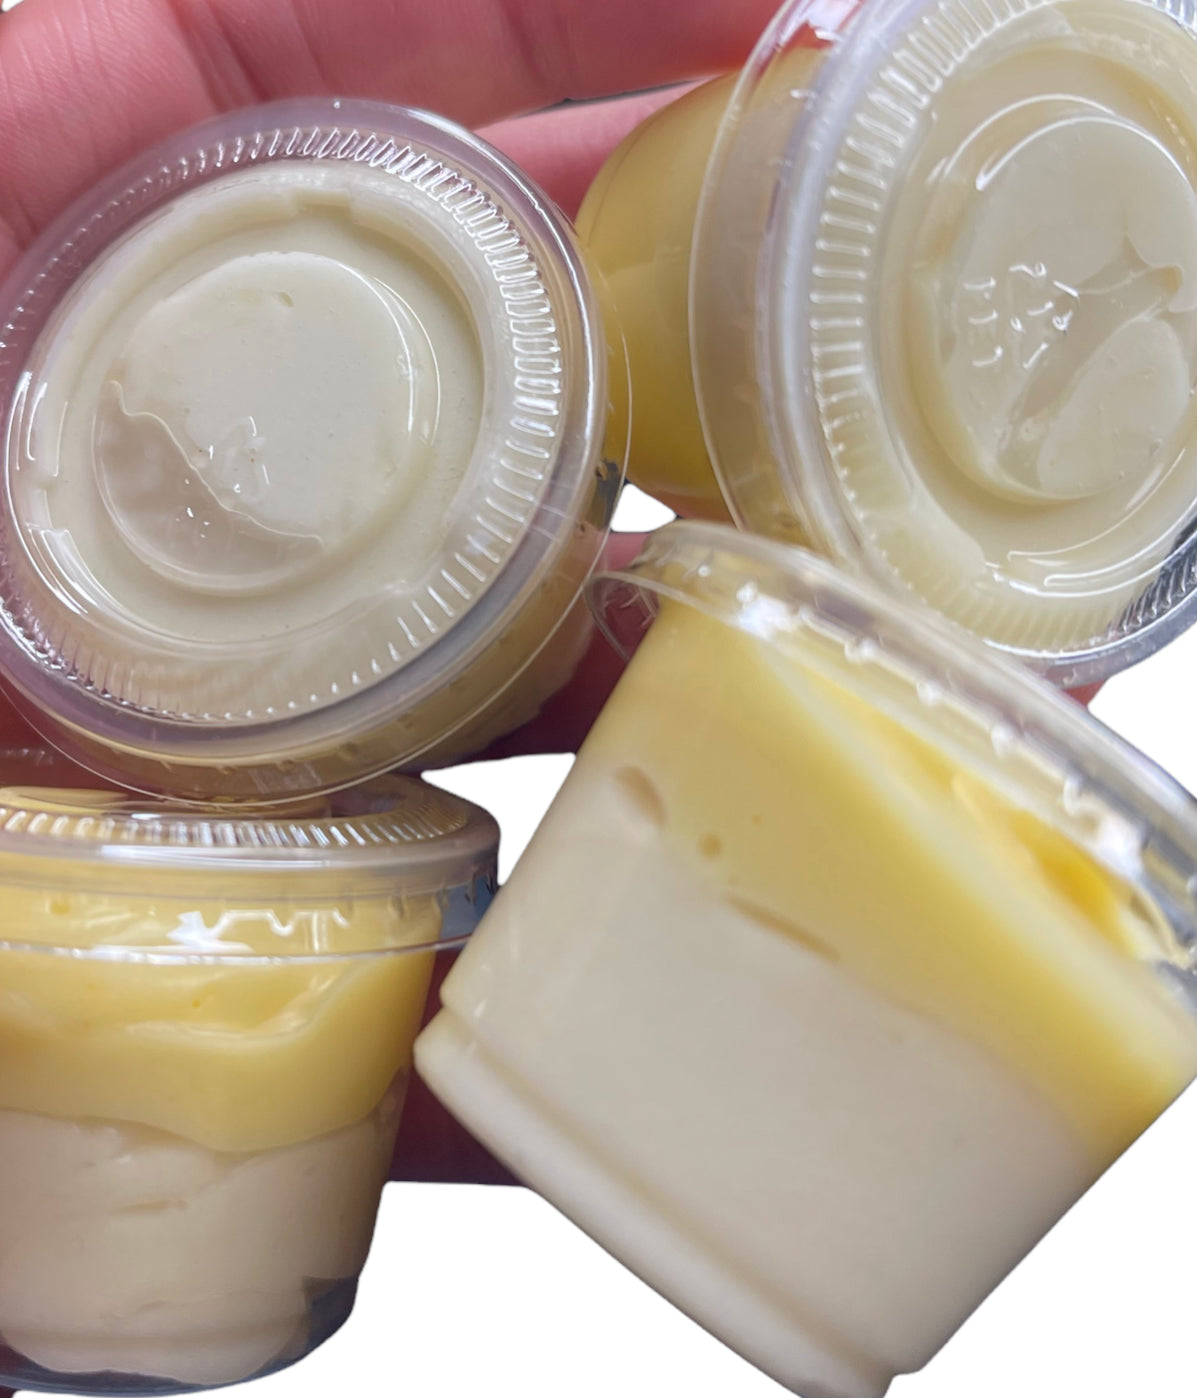 Free body cream samples